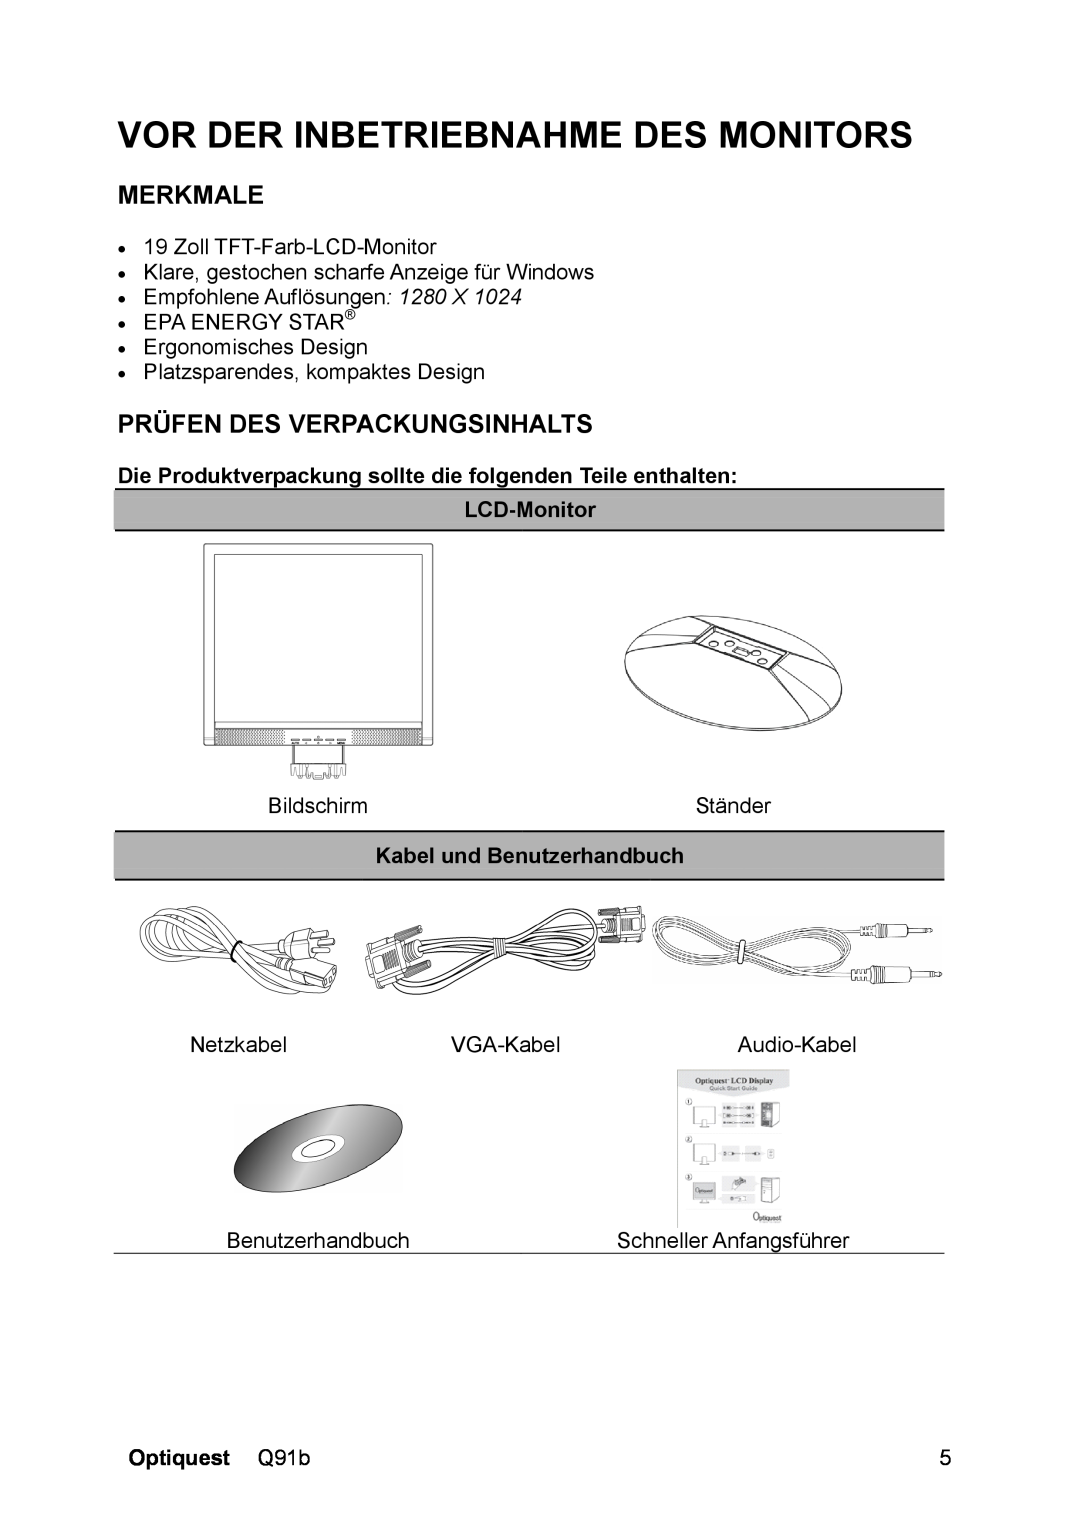 ViewSonic Q91B Vor Der Inbetriebnahme Des Monitors, Merkmale, Prüfen Des Verpackungsinhalts, LCD-Monitor, Optiquest Q91b 